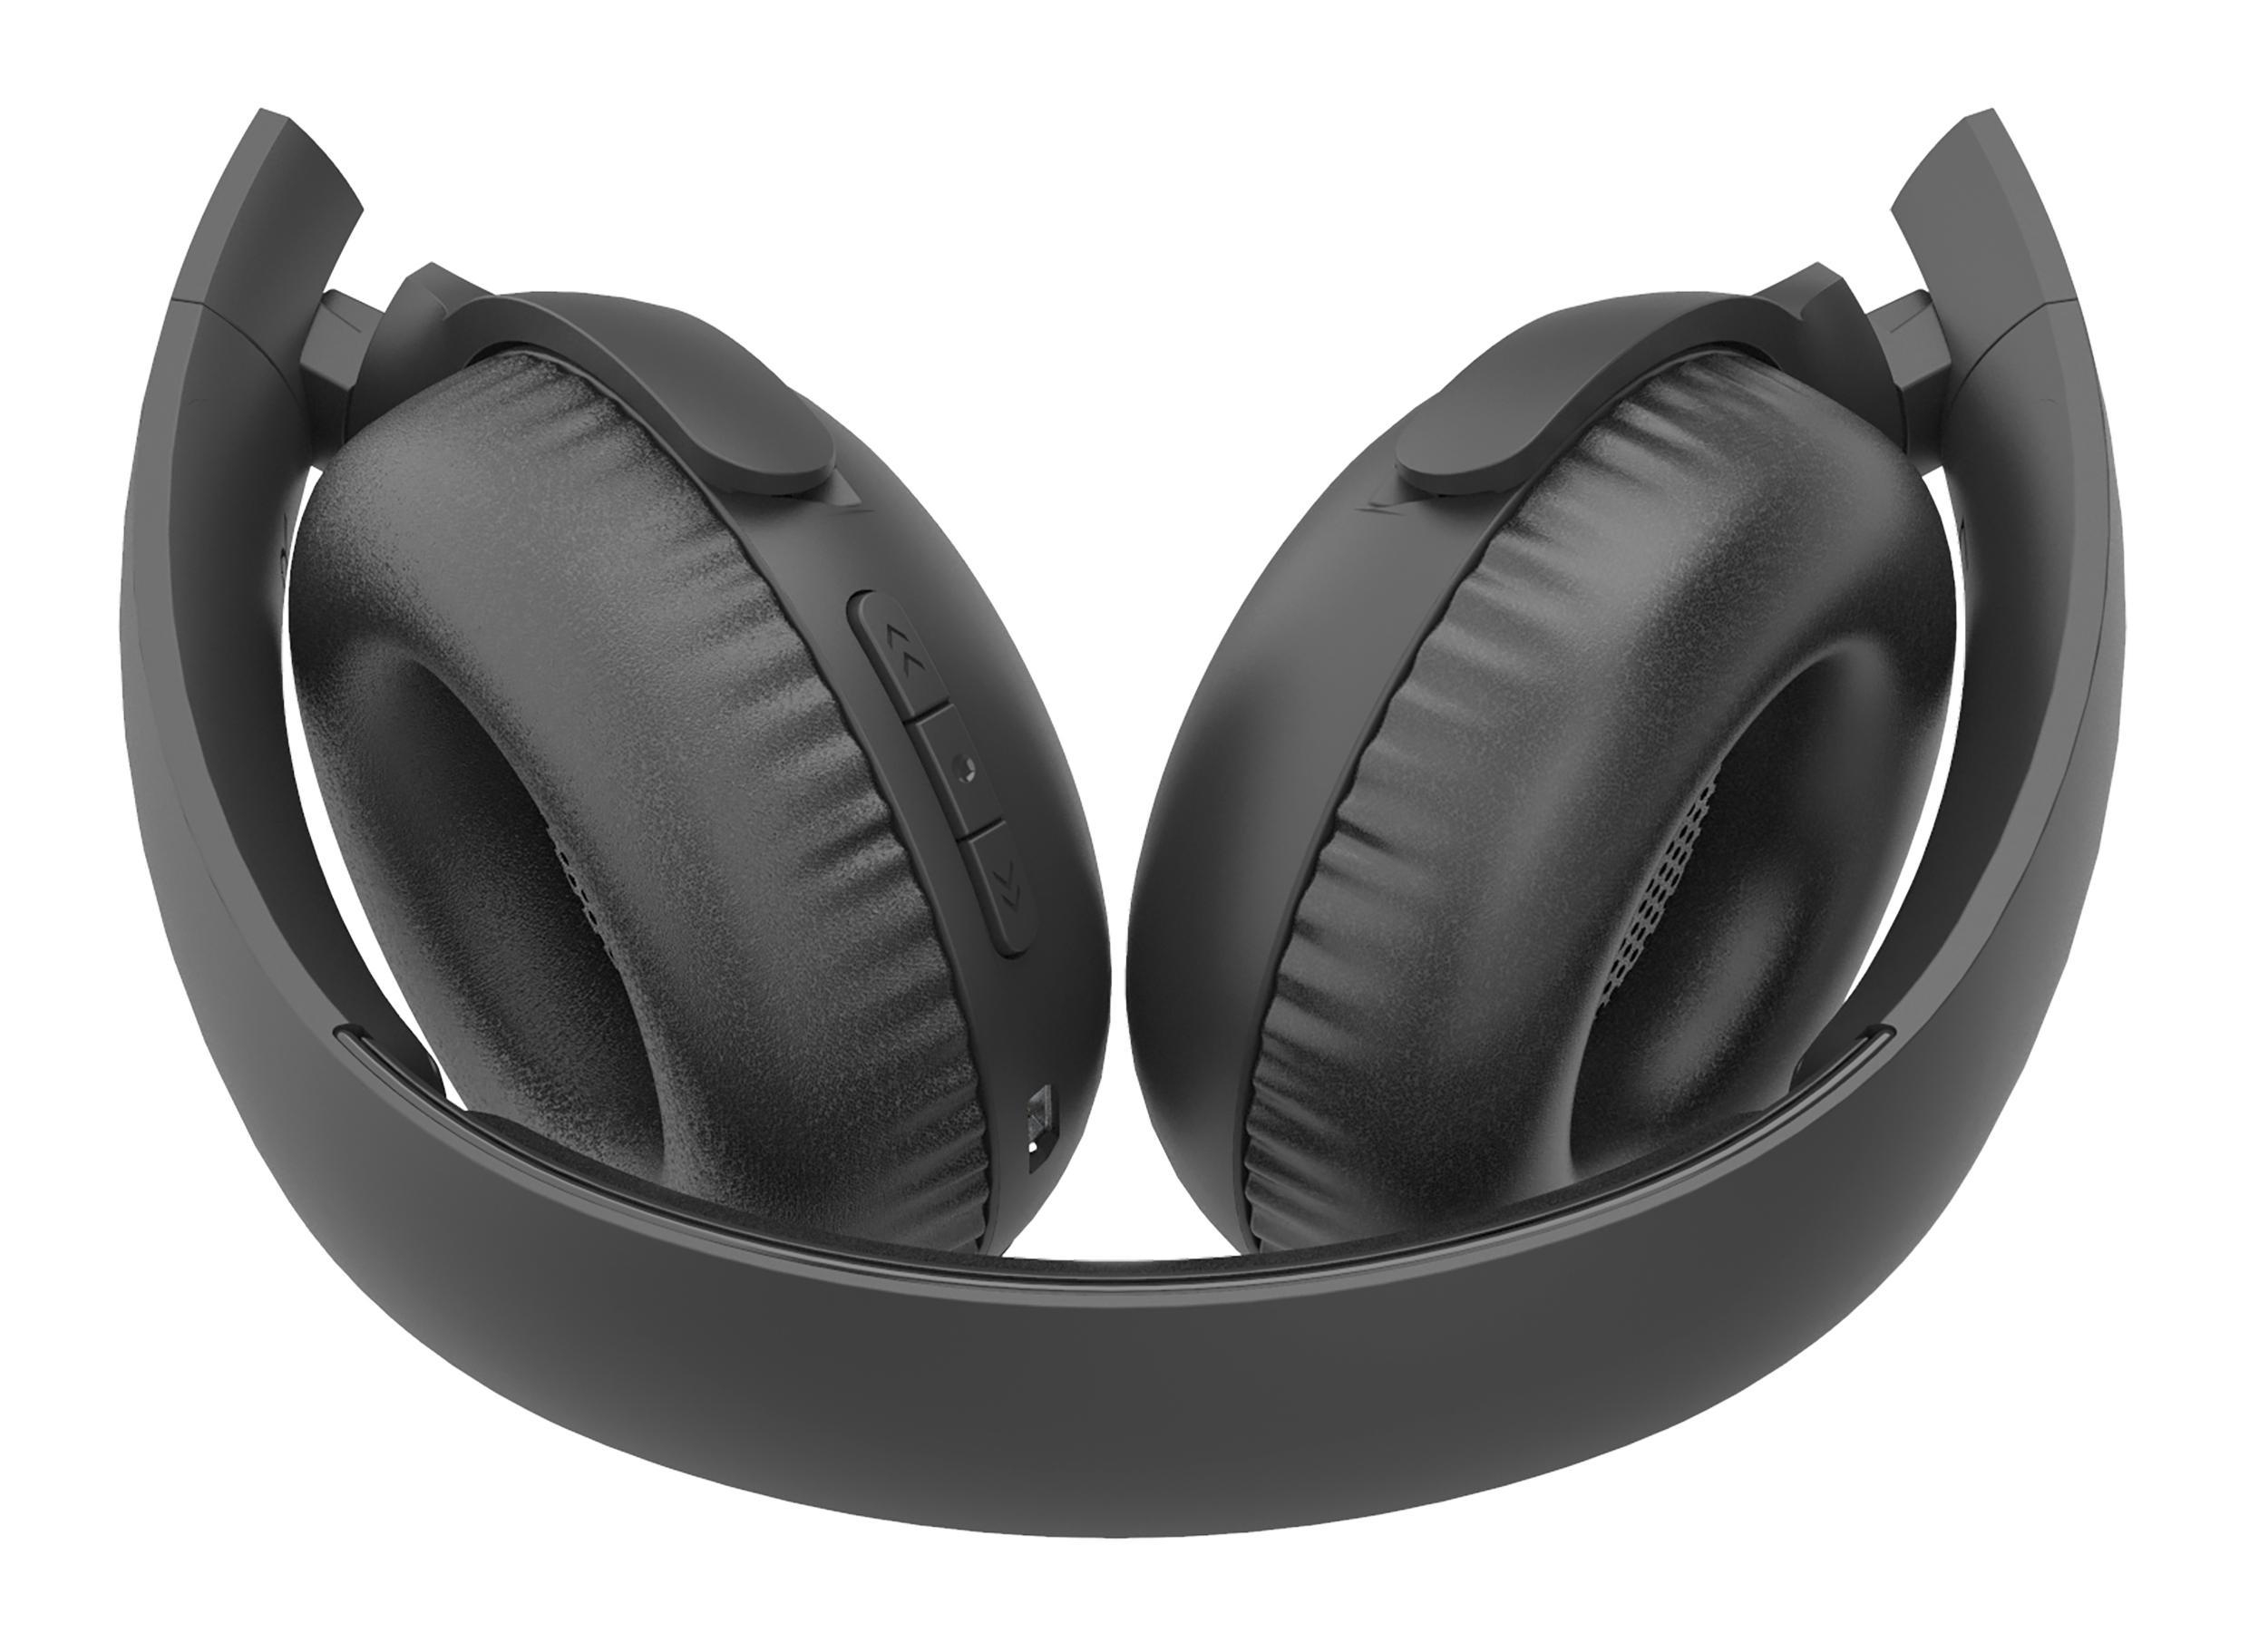 Schwarz On-ear UH202BK, Kopfhörer Bluetooth PHILIPS